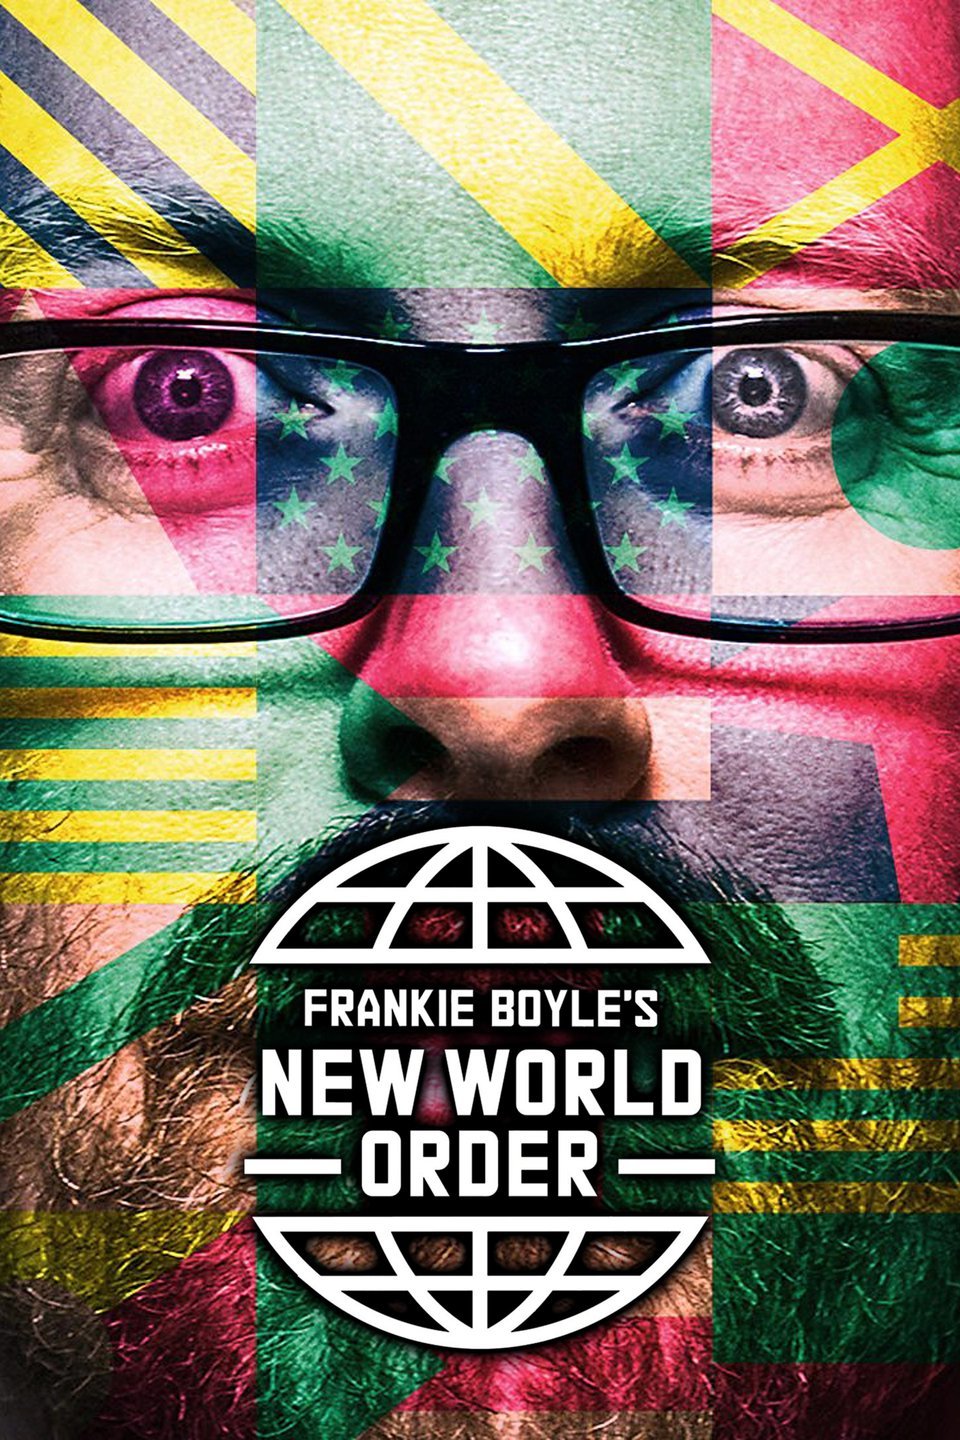 Frankie Boyle's New World Order - Season 6 Episode 6